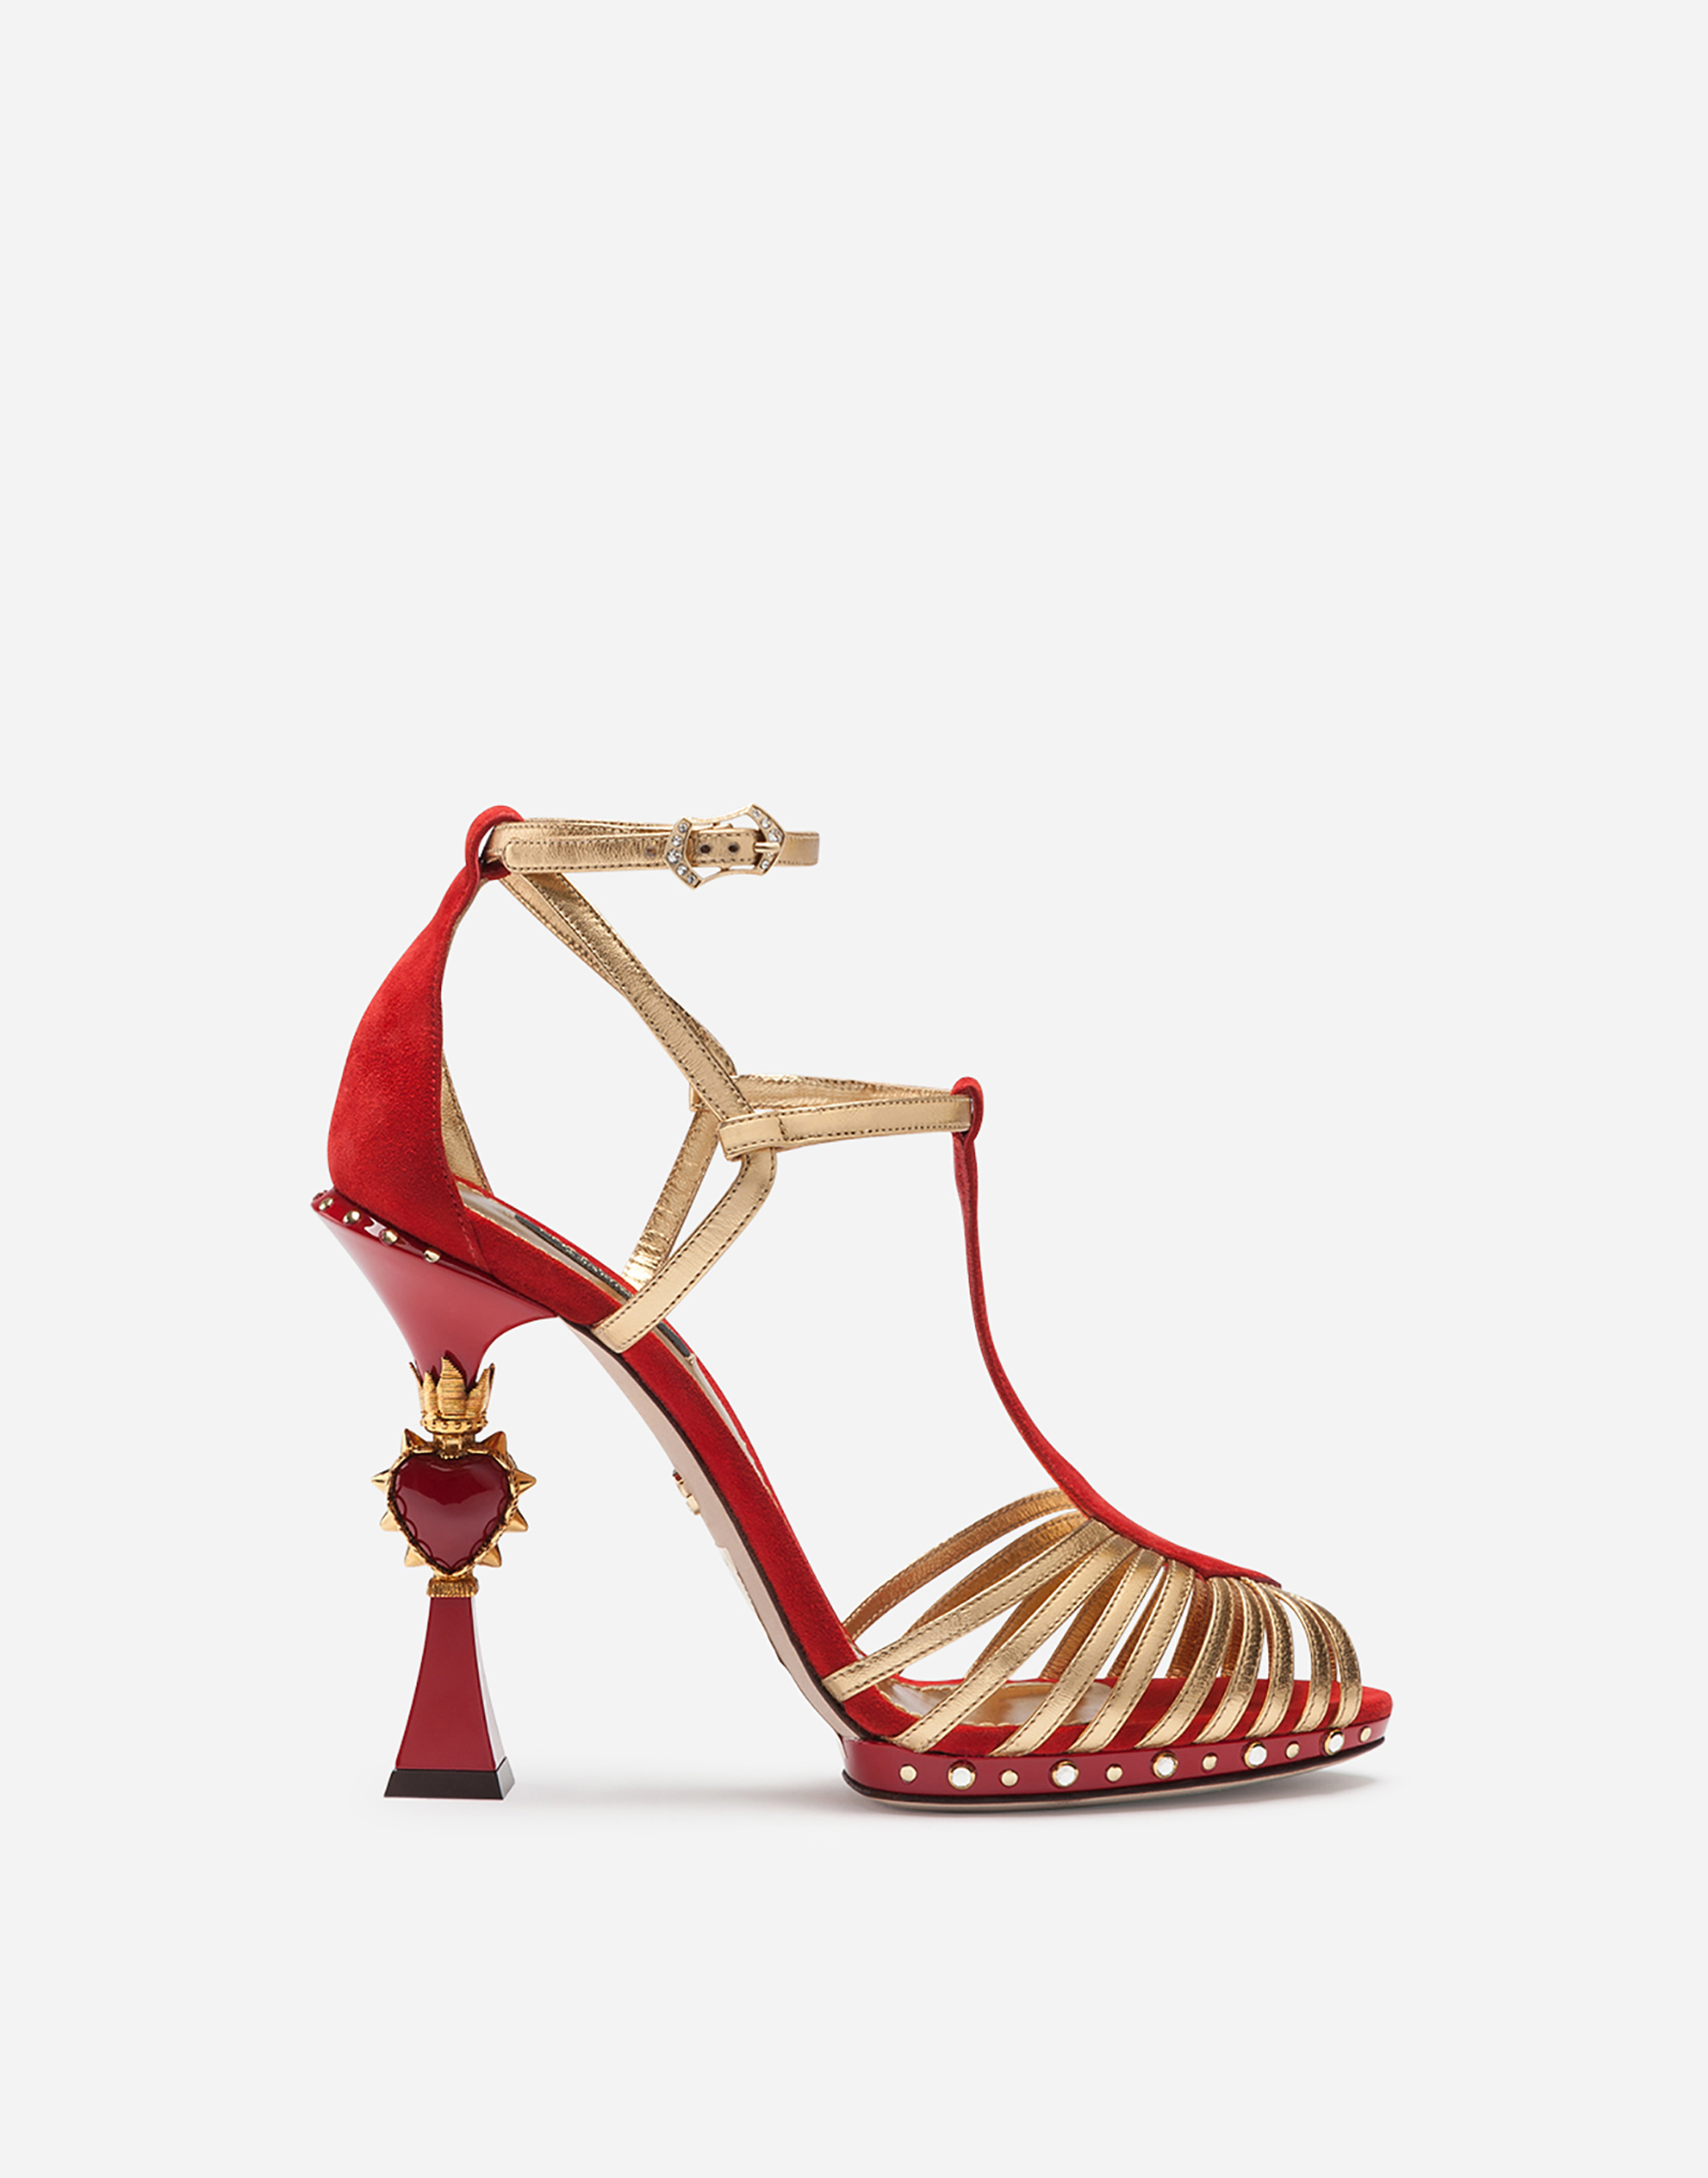 Dolce & Gabbana Heels | Sale Up To 70% Off | Sendegaro